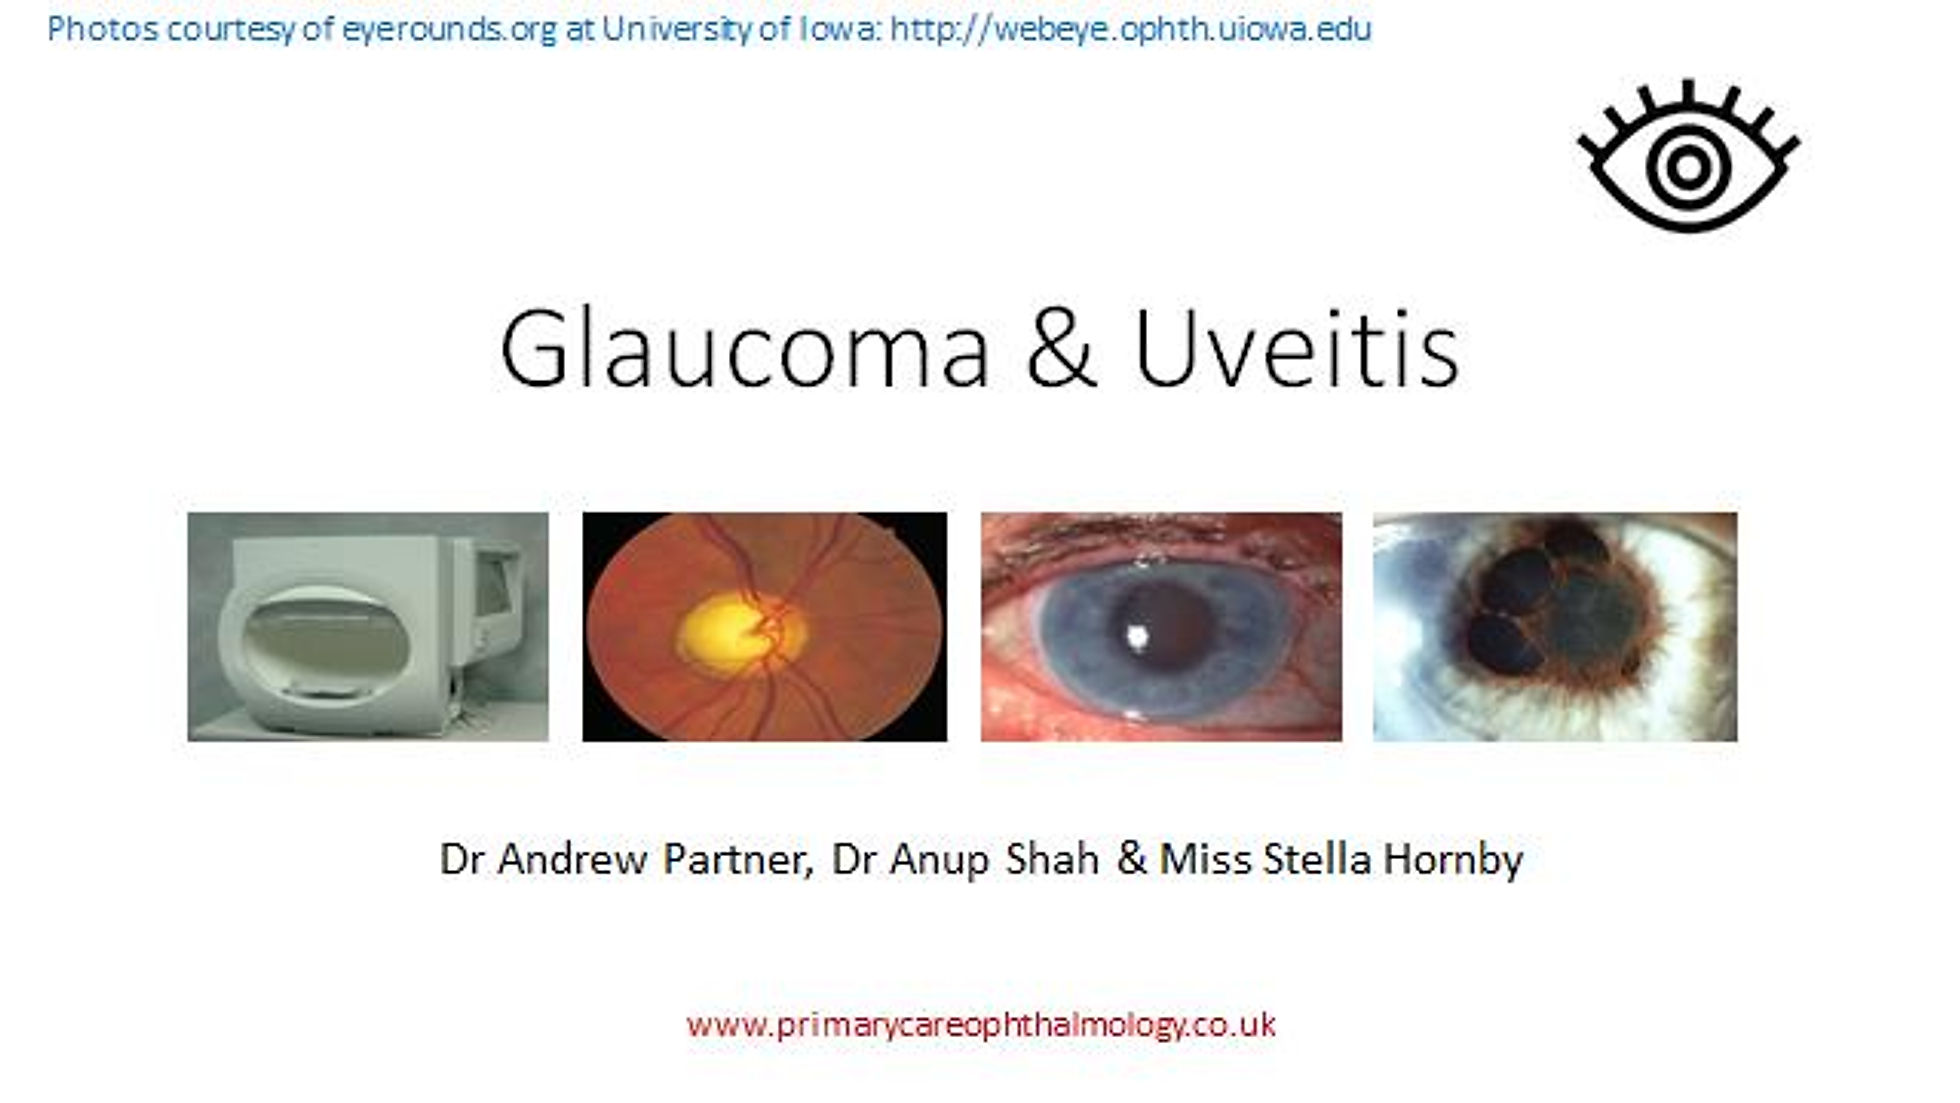 Glaucoma & Uveitis in Primary Care